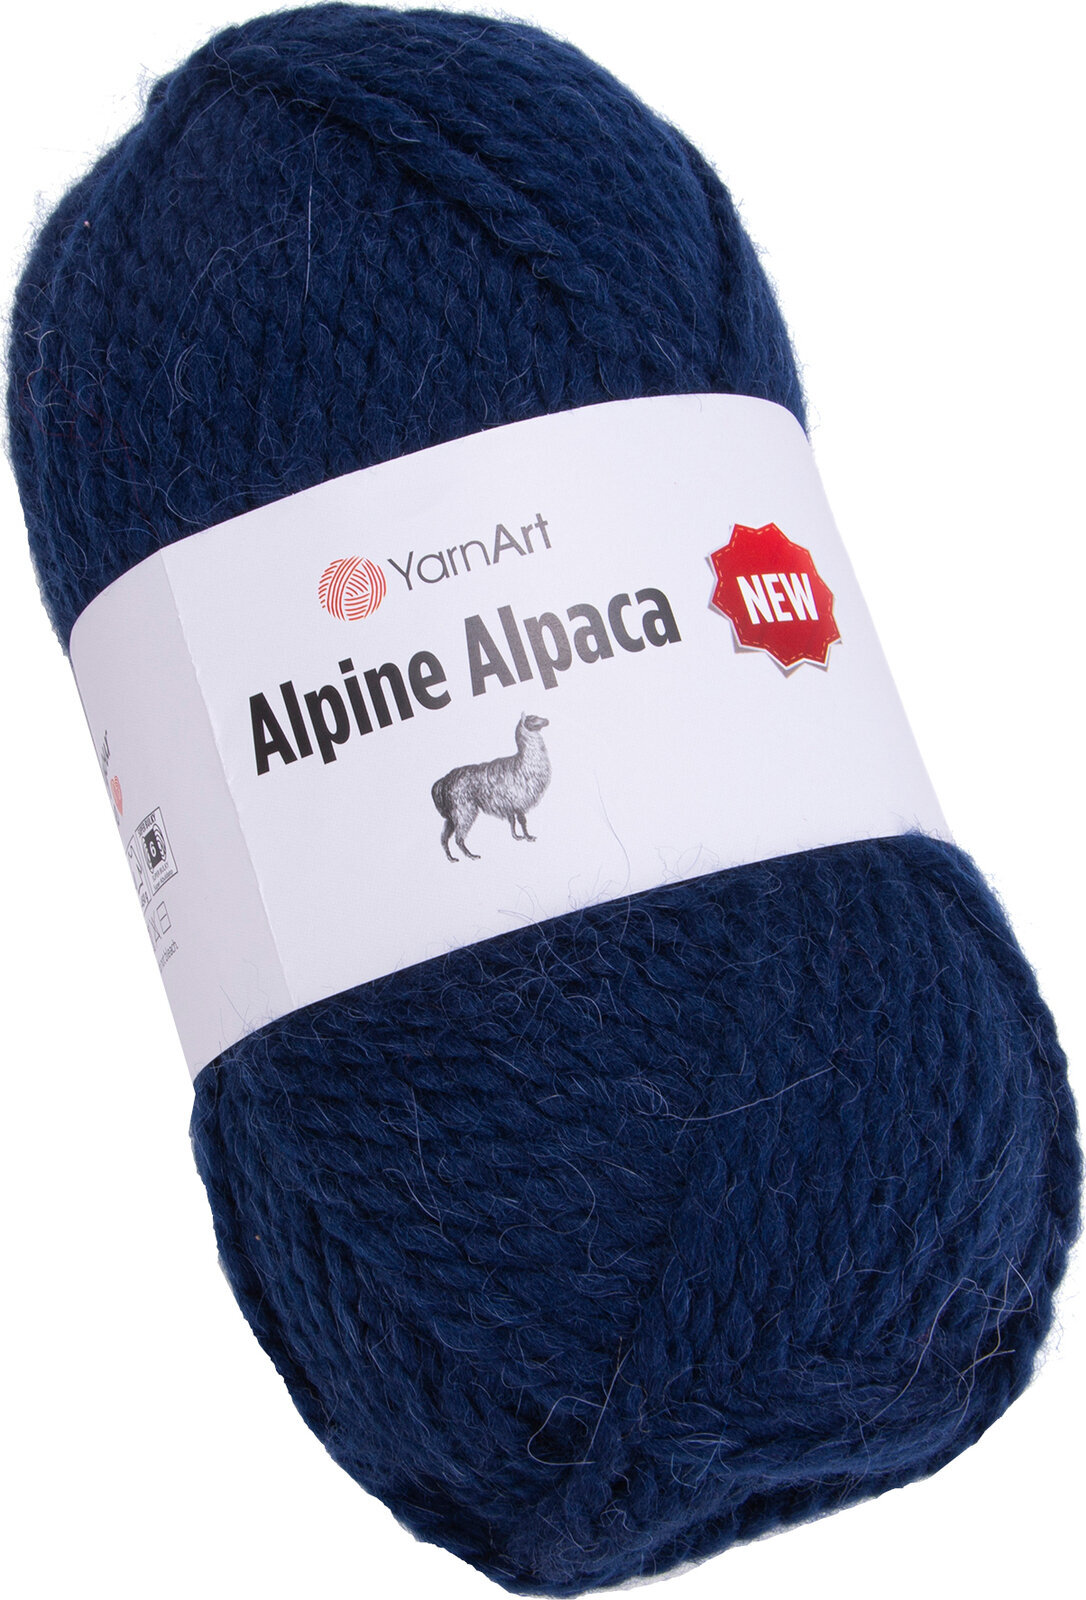 Knitting Yarn Yarn Art Alpine Alpaca New 1437